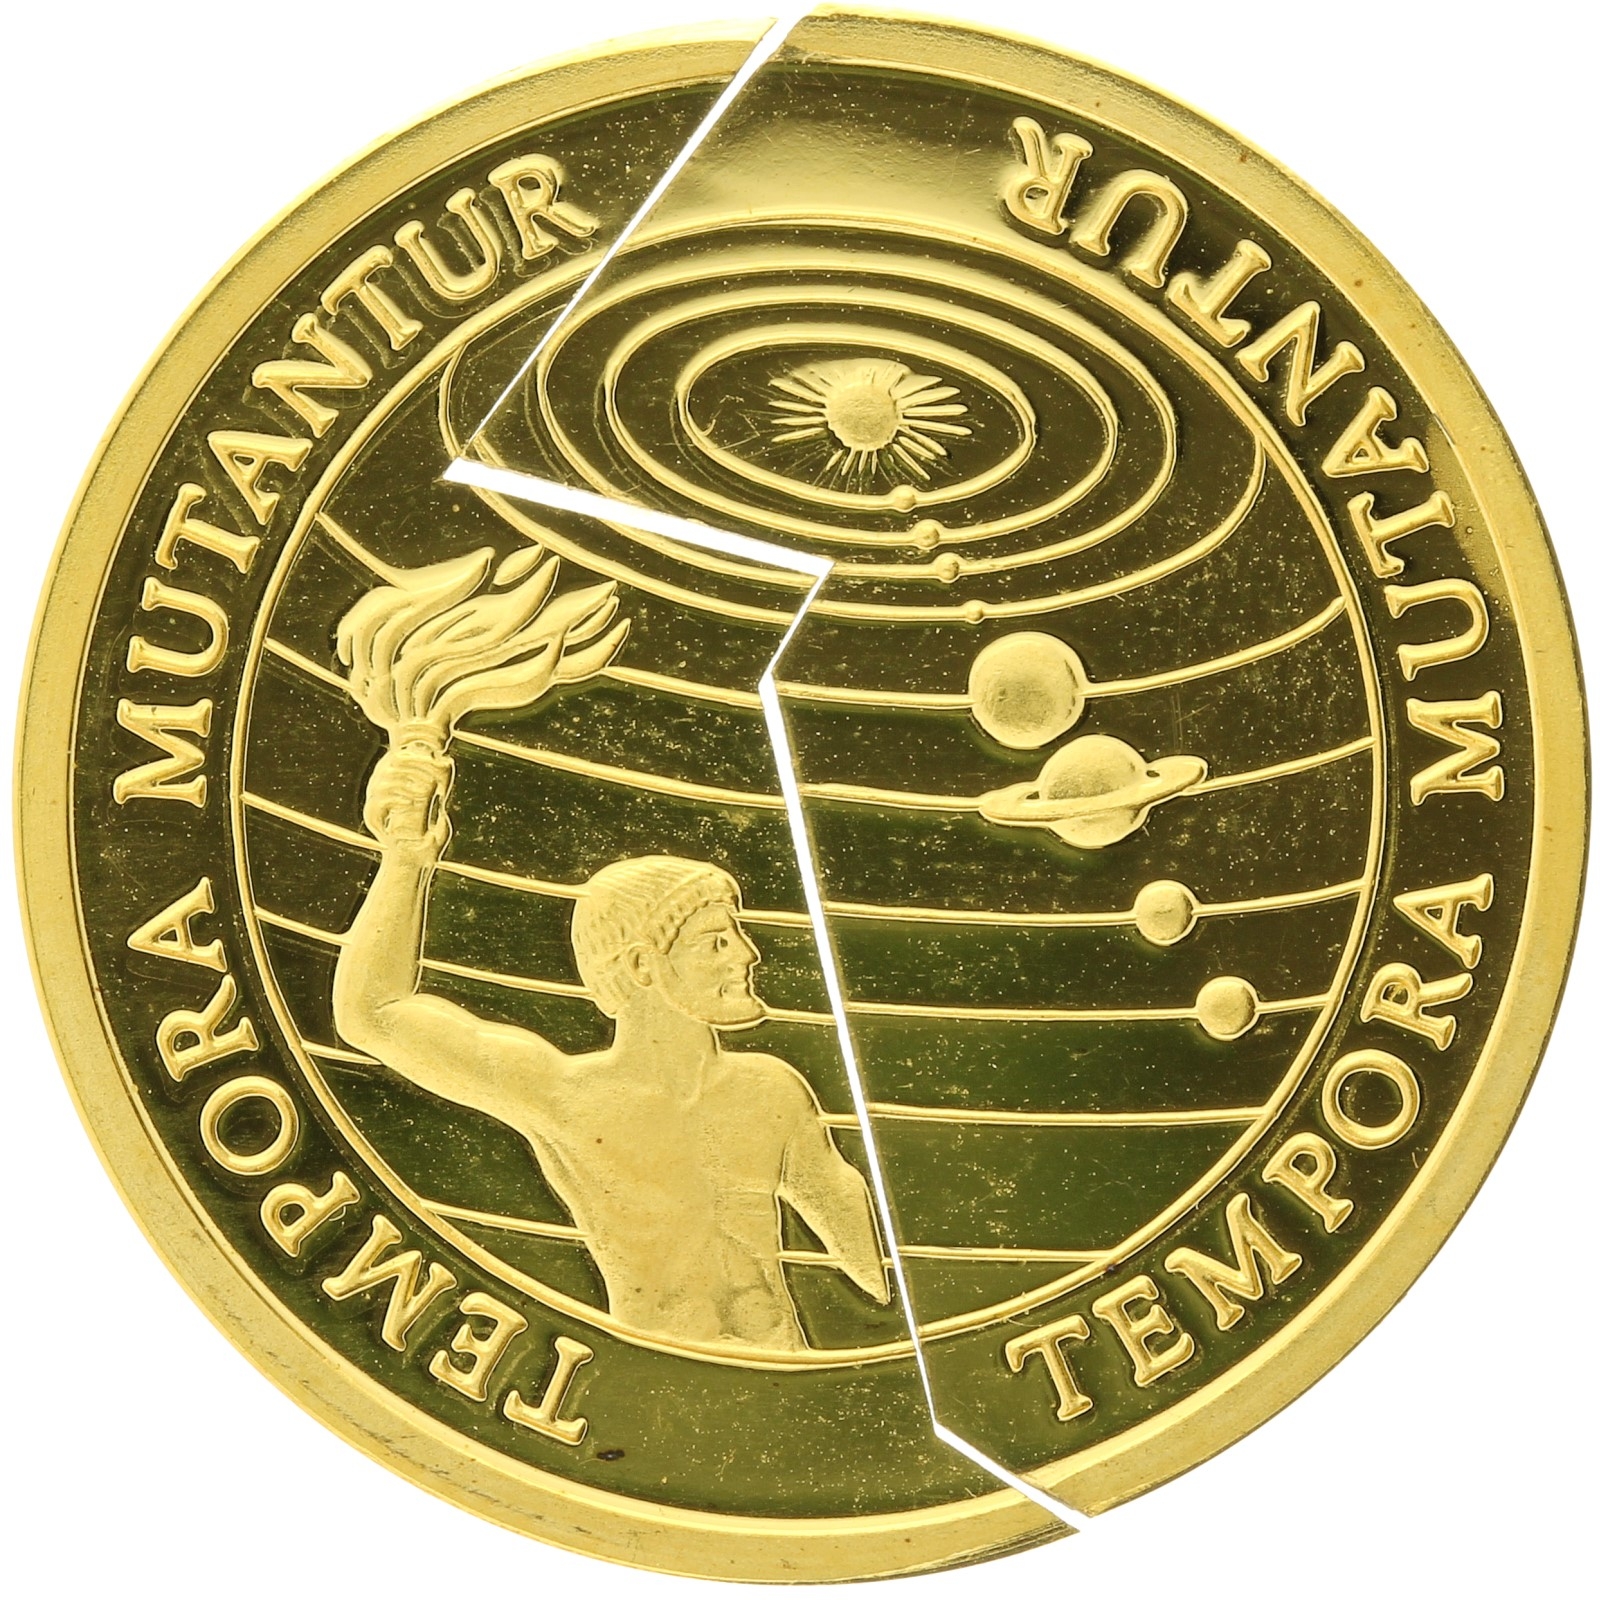 Kiribati & Samoa - 50 dollars - 1997 - Millenium Gold Proof coin